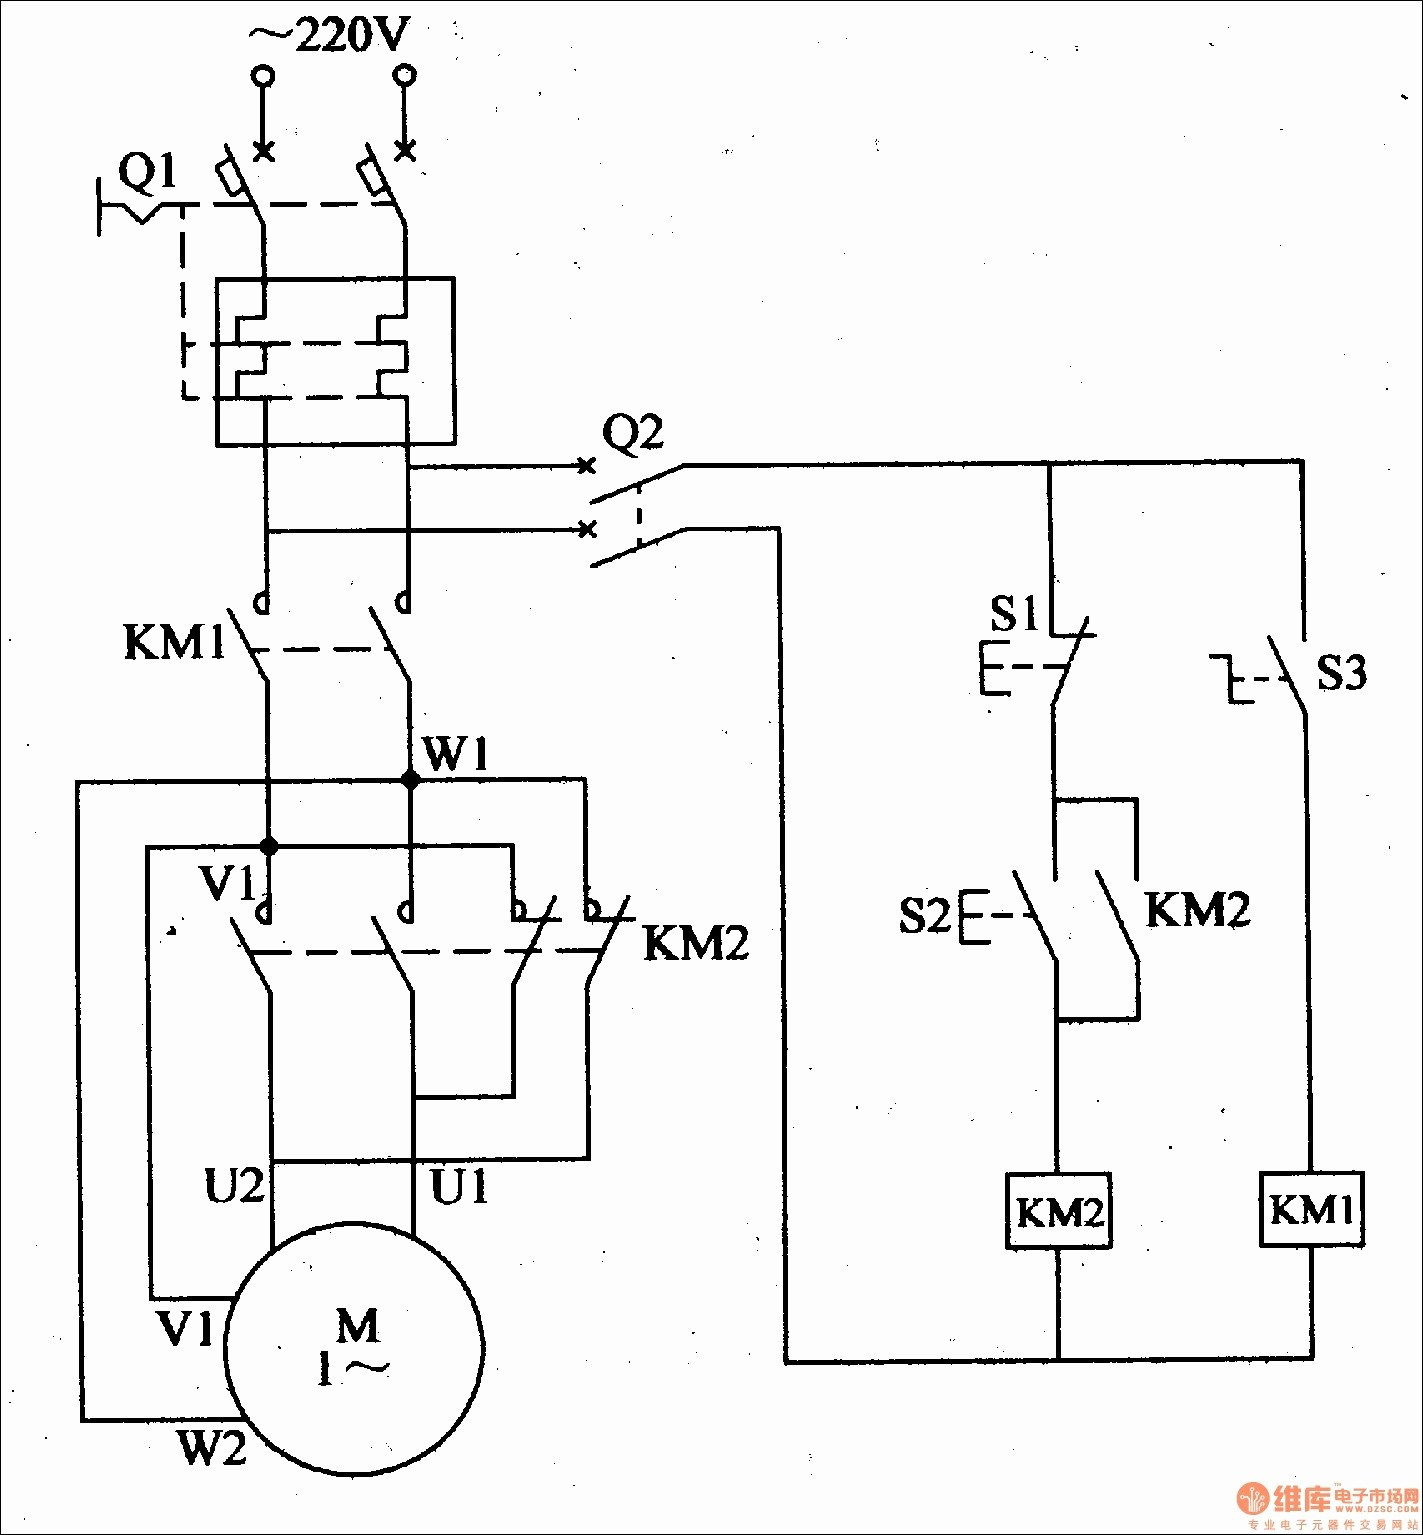 Railex Wiring Diagrams Single Phase Motor Forward And Reverse - Reversing Single Phase Motor Wiring Diagram